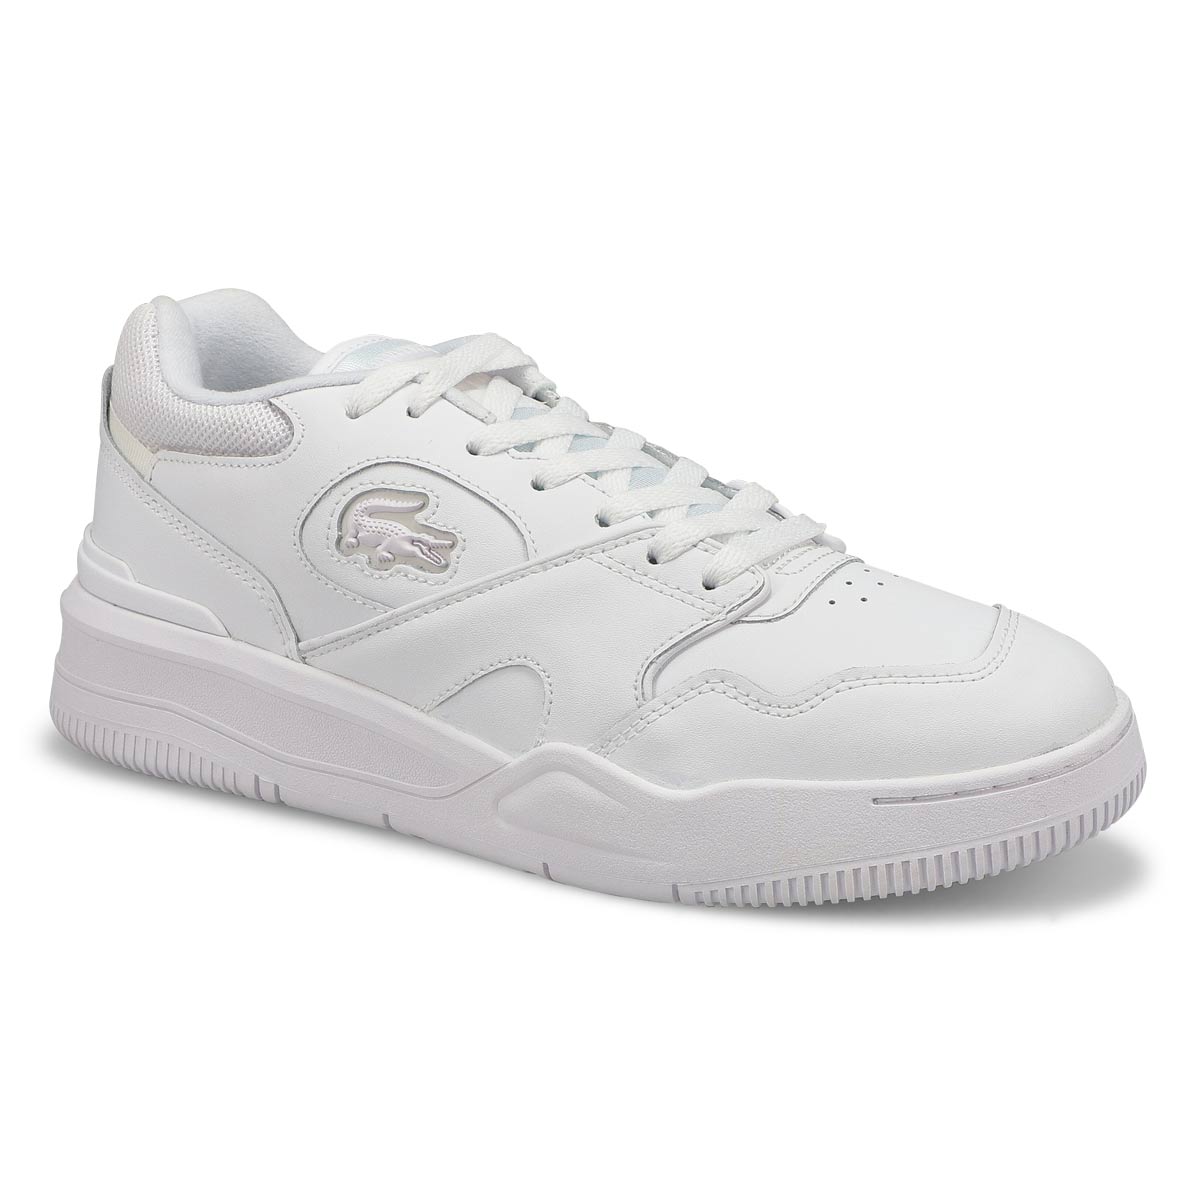 Men's Lineshot Lace Up Fashion Sneaker - White/White